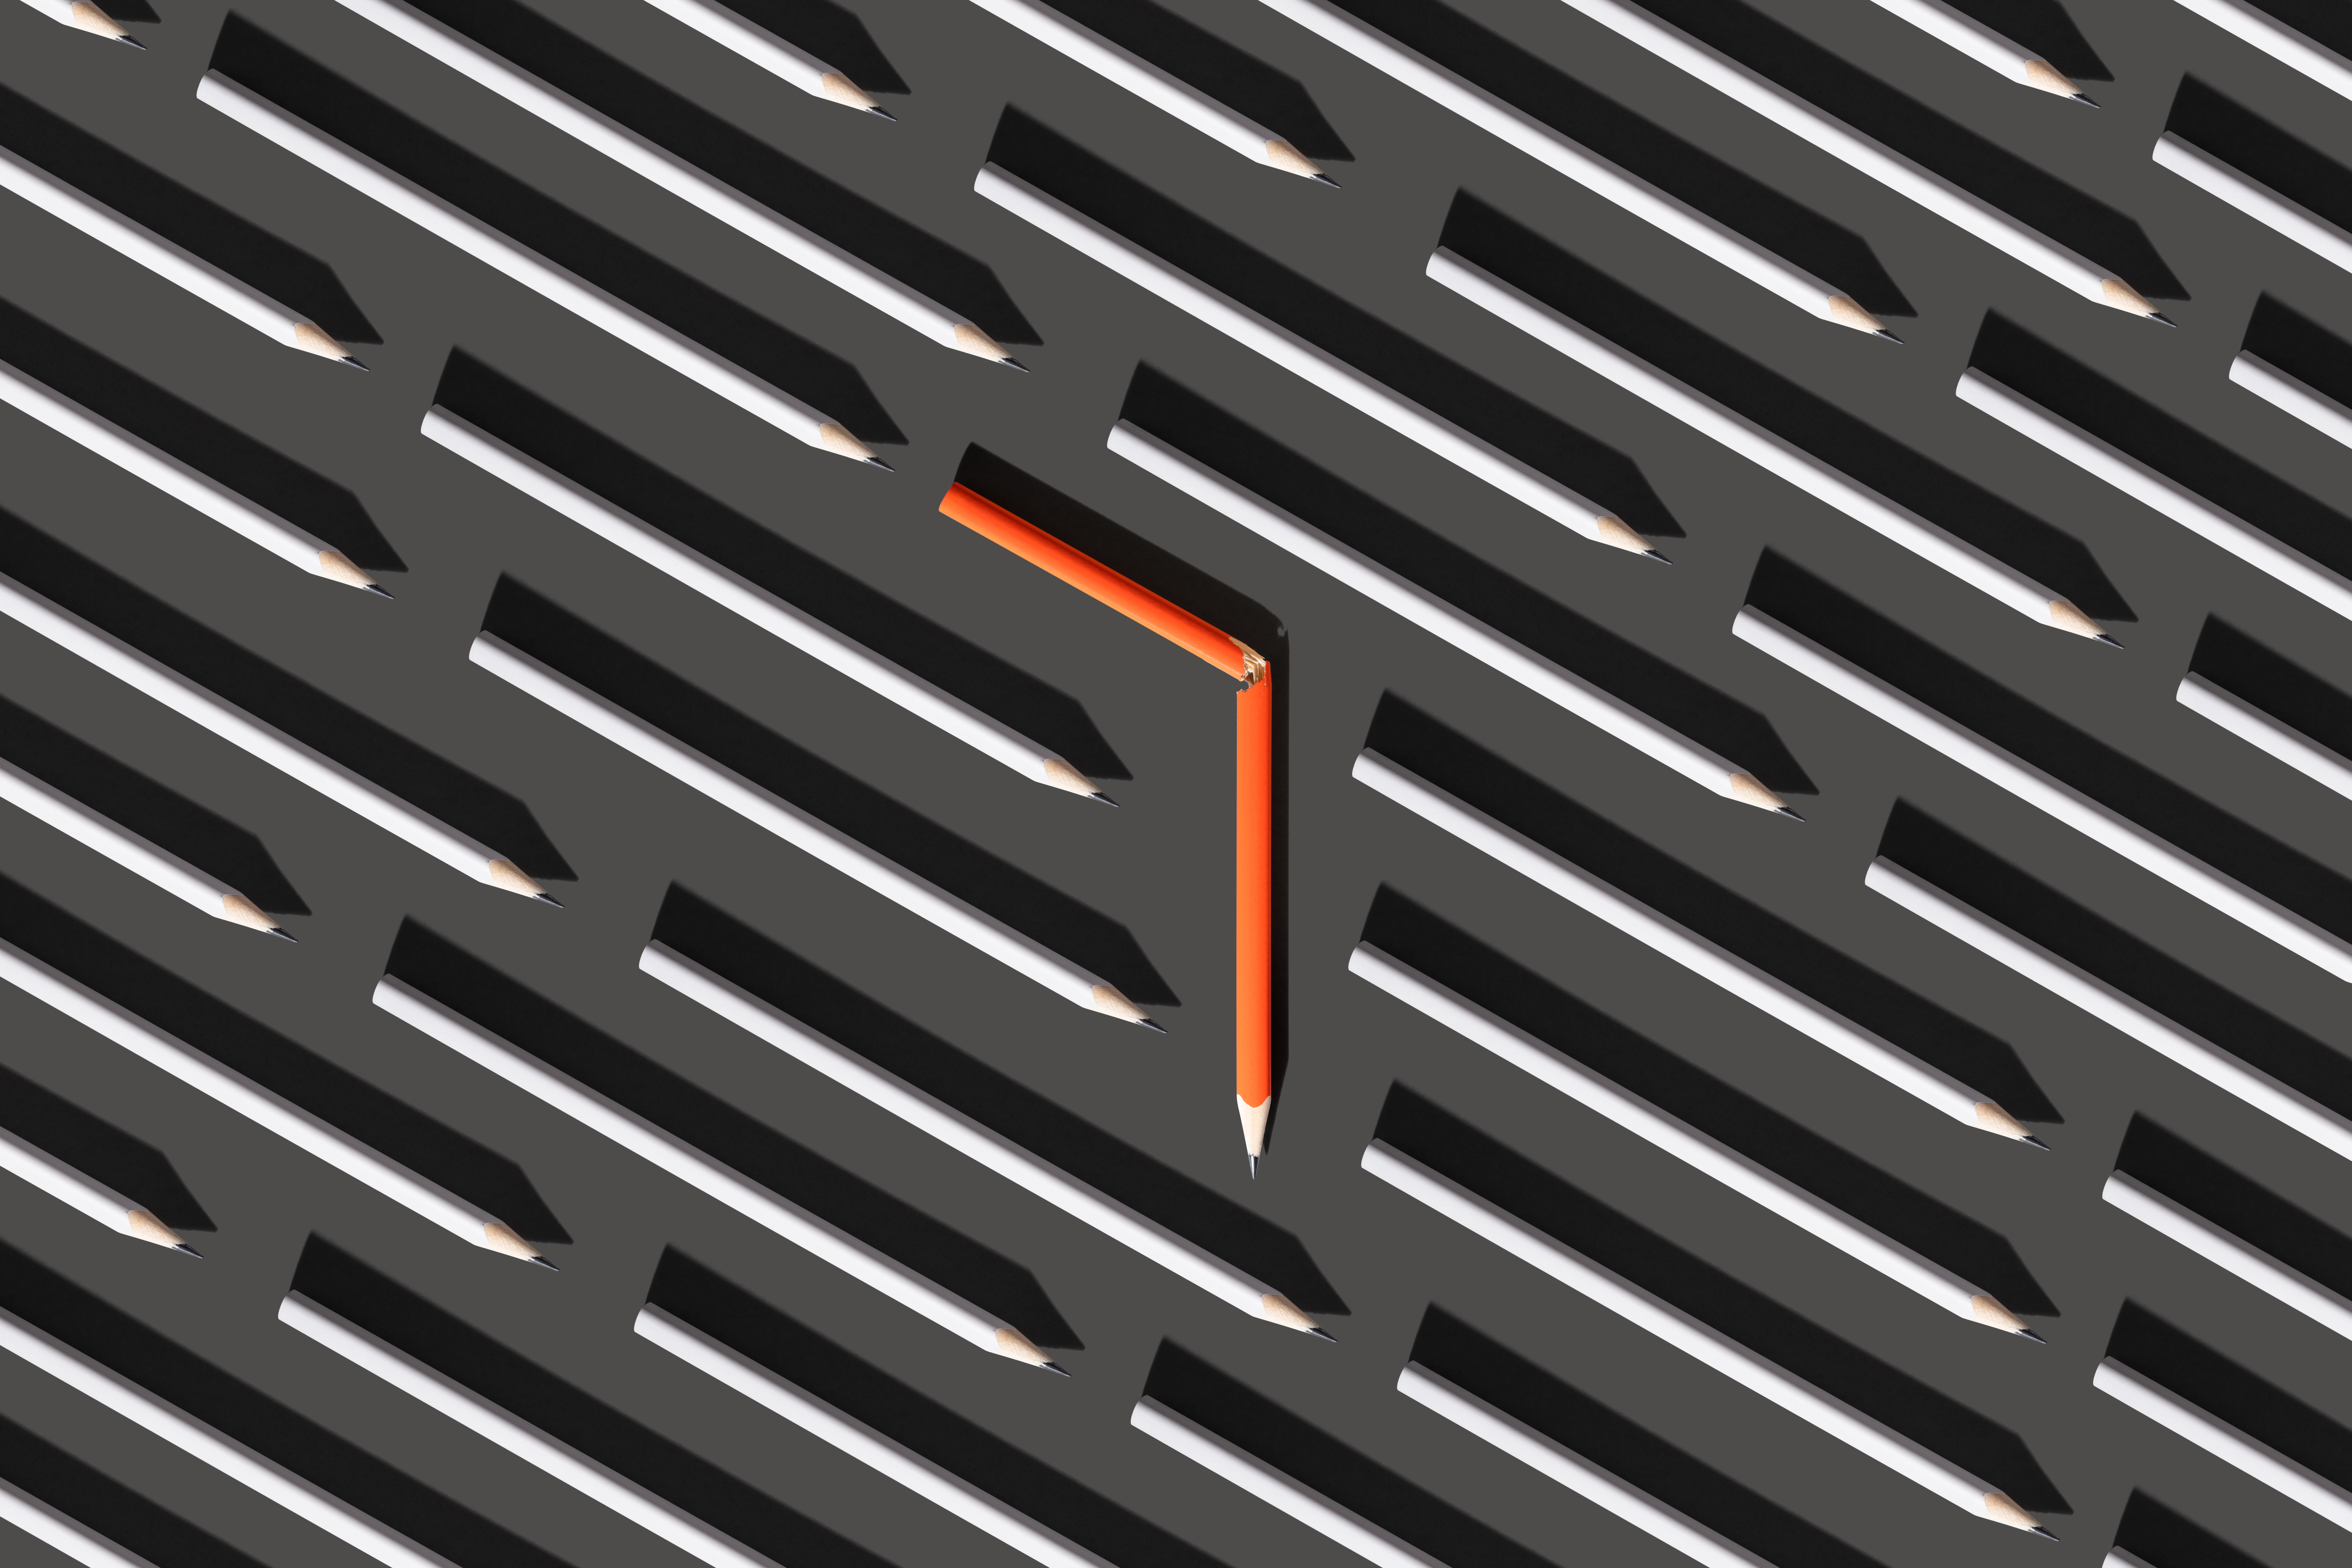 Image of an orange broken pencil amid straight gray pencils to represent pivoting.